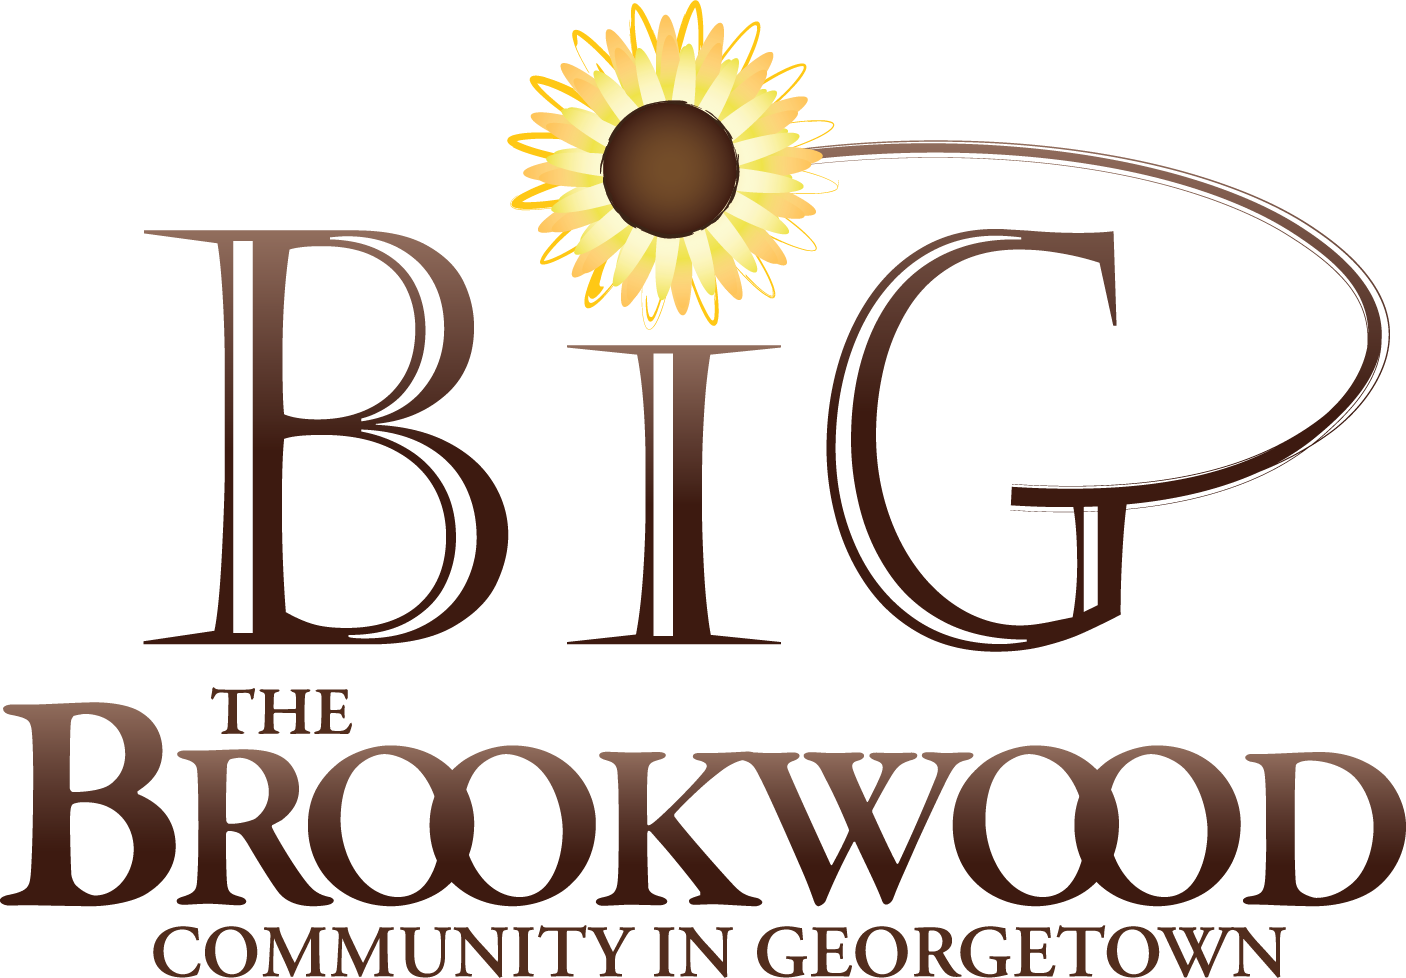 The Brookwood Community in Georgetown